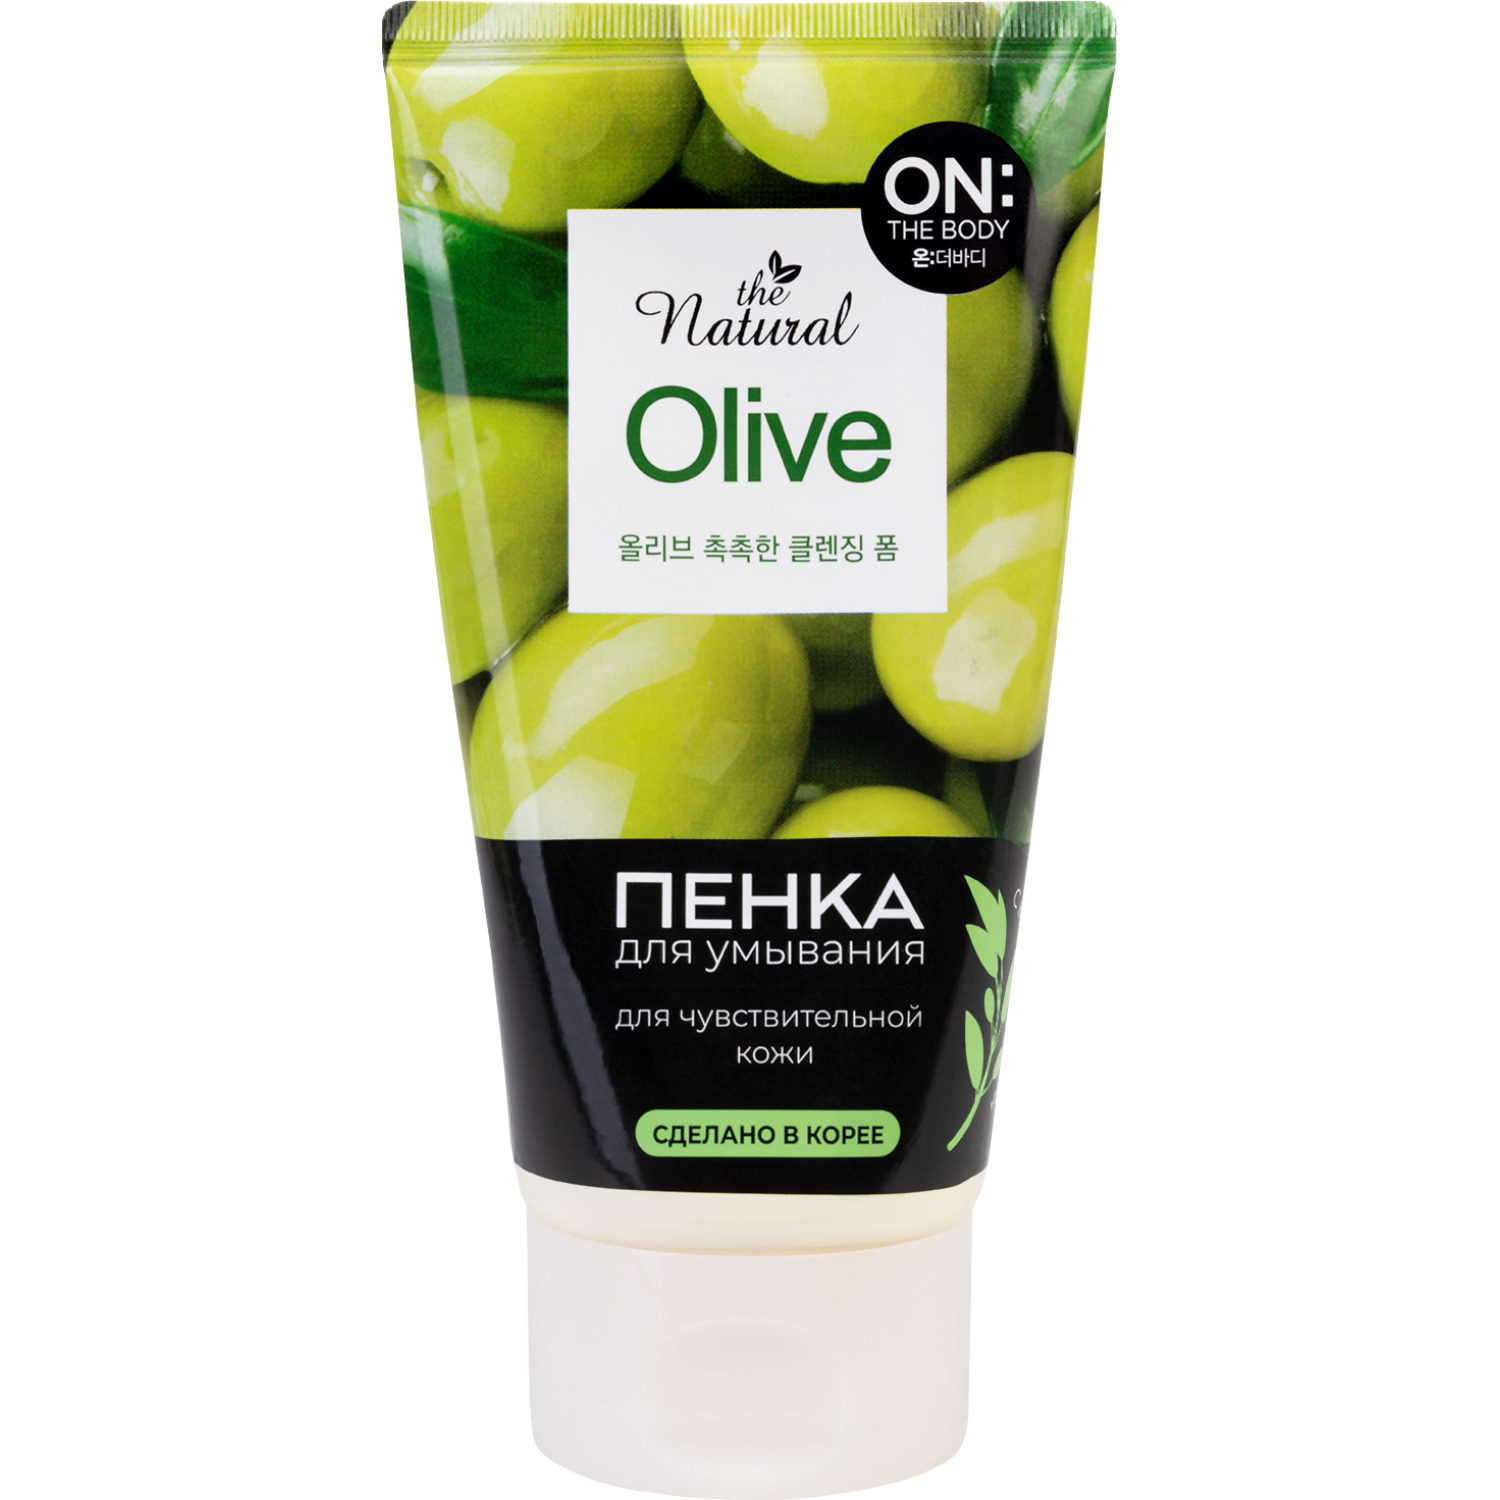 Пенка для умывания ON THE BODY Natural Olive с оливой, очищающая, натуральная, 120 мл